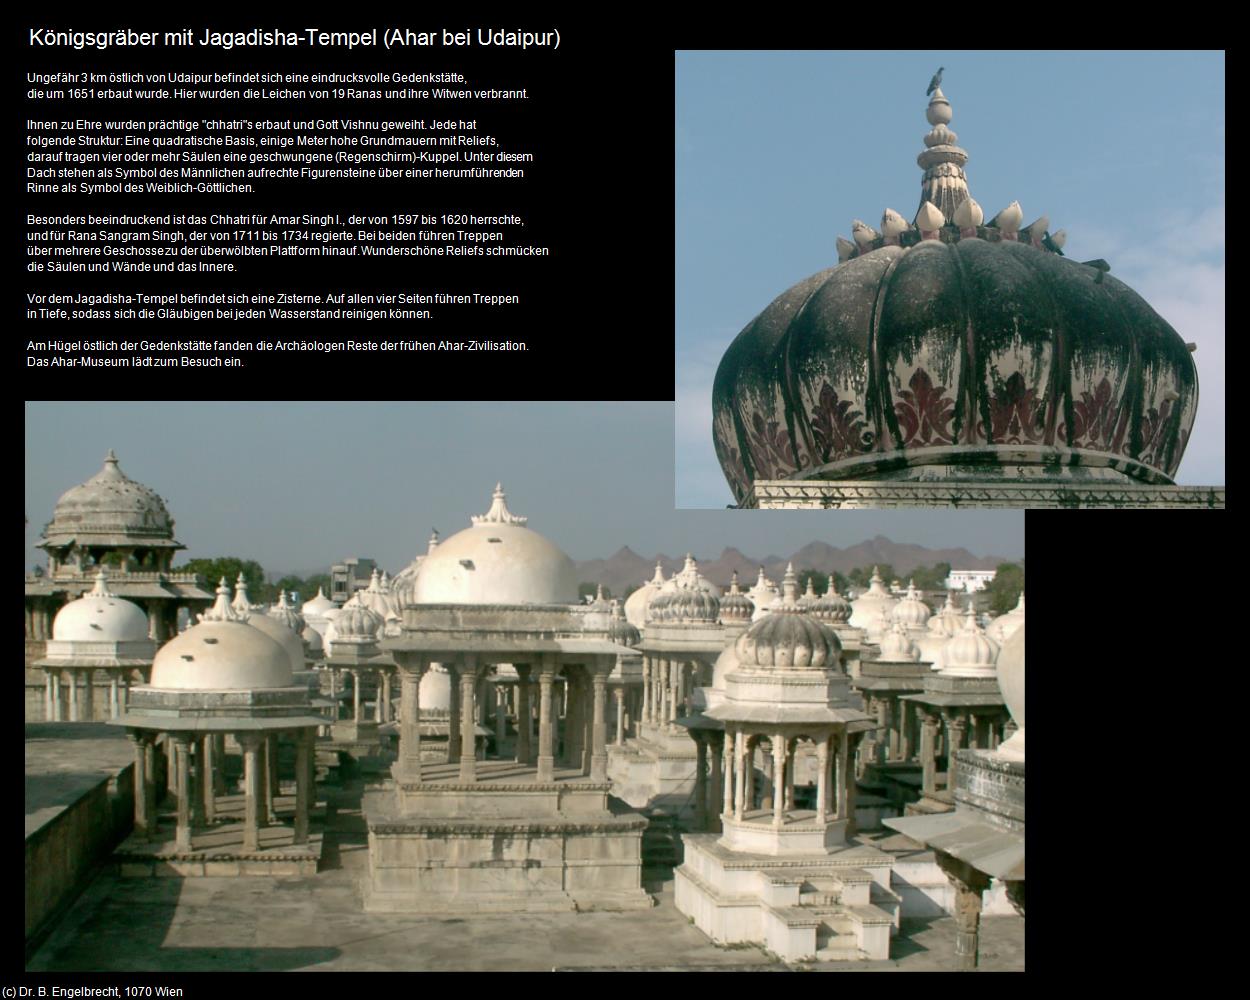 Königsgräber mit Jagadisha-Tempel (Ahar bei Udaipur) in Rajasthan - das Land der Könige